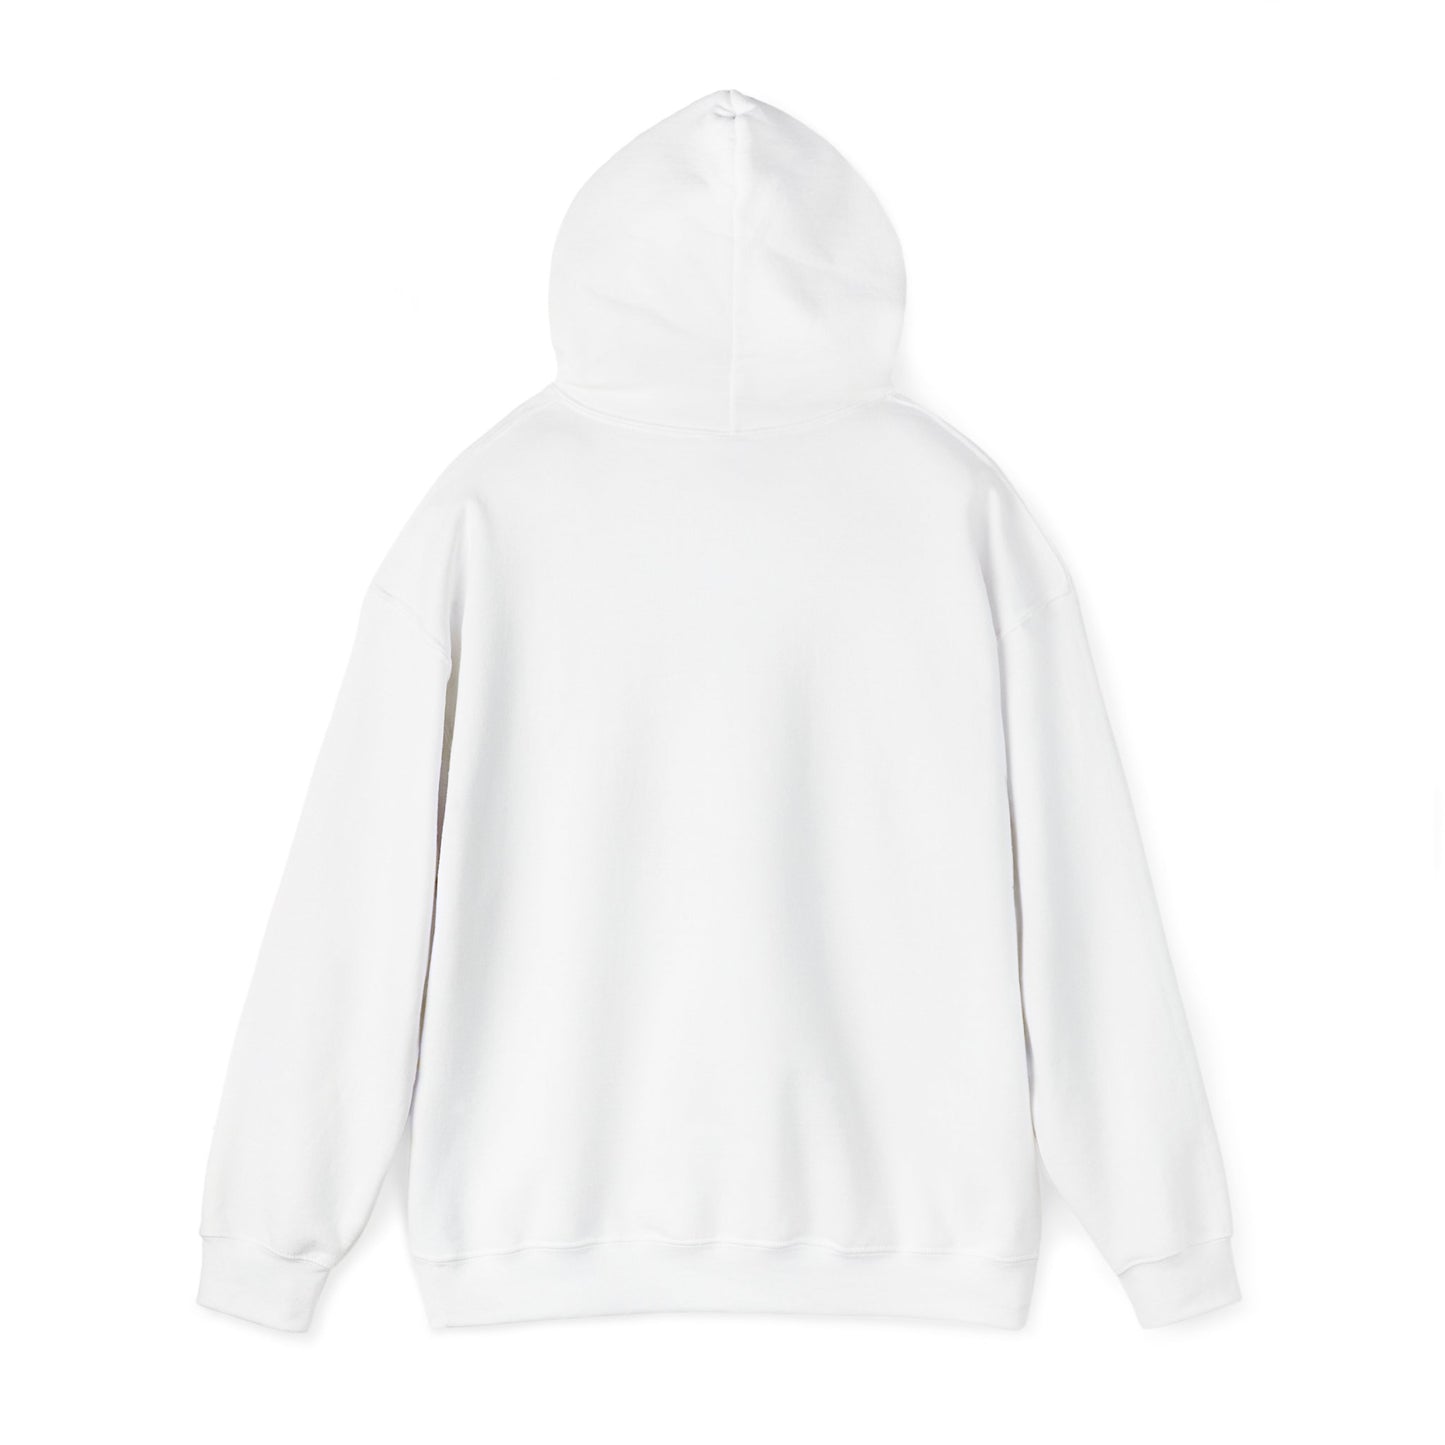 'Fear Sells, Until You Stop Buying It' Heavy Blend™ Hooded Sweatshirt